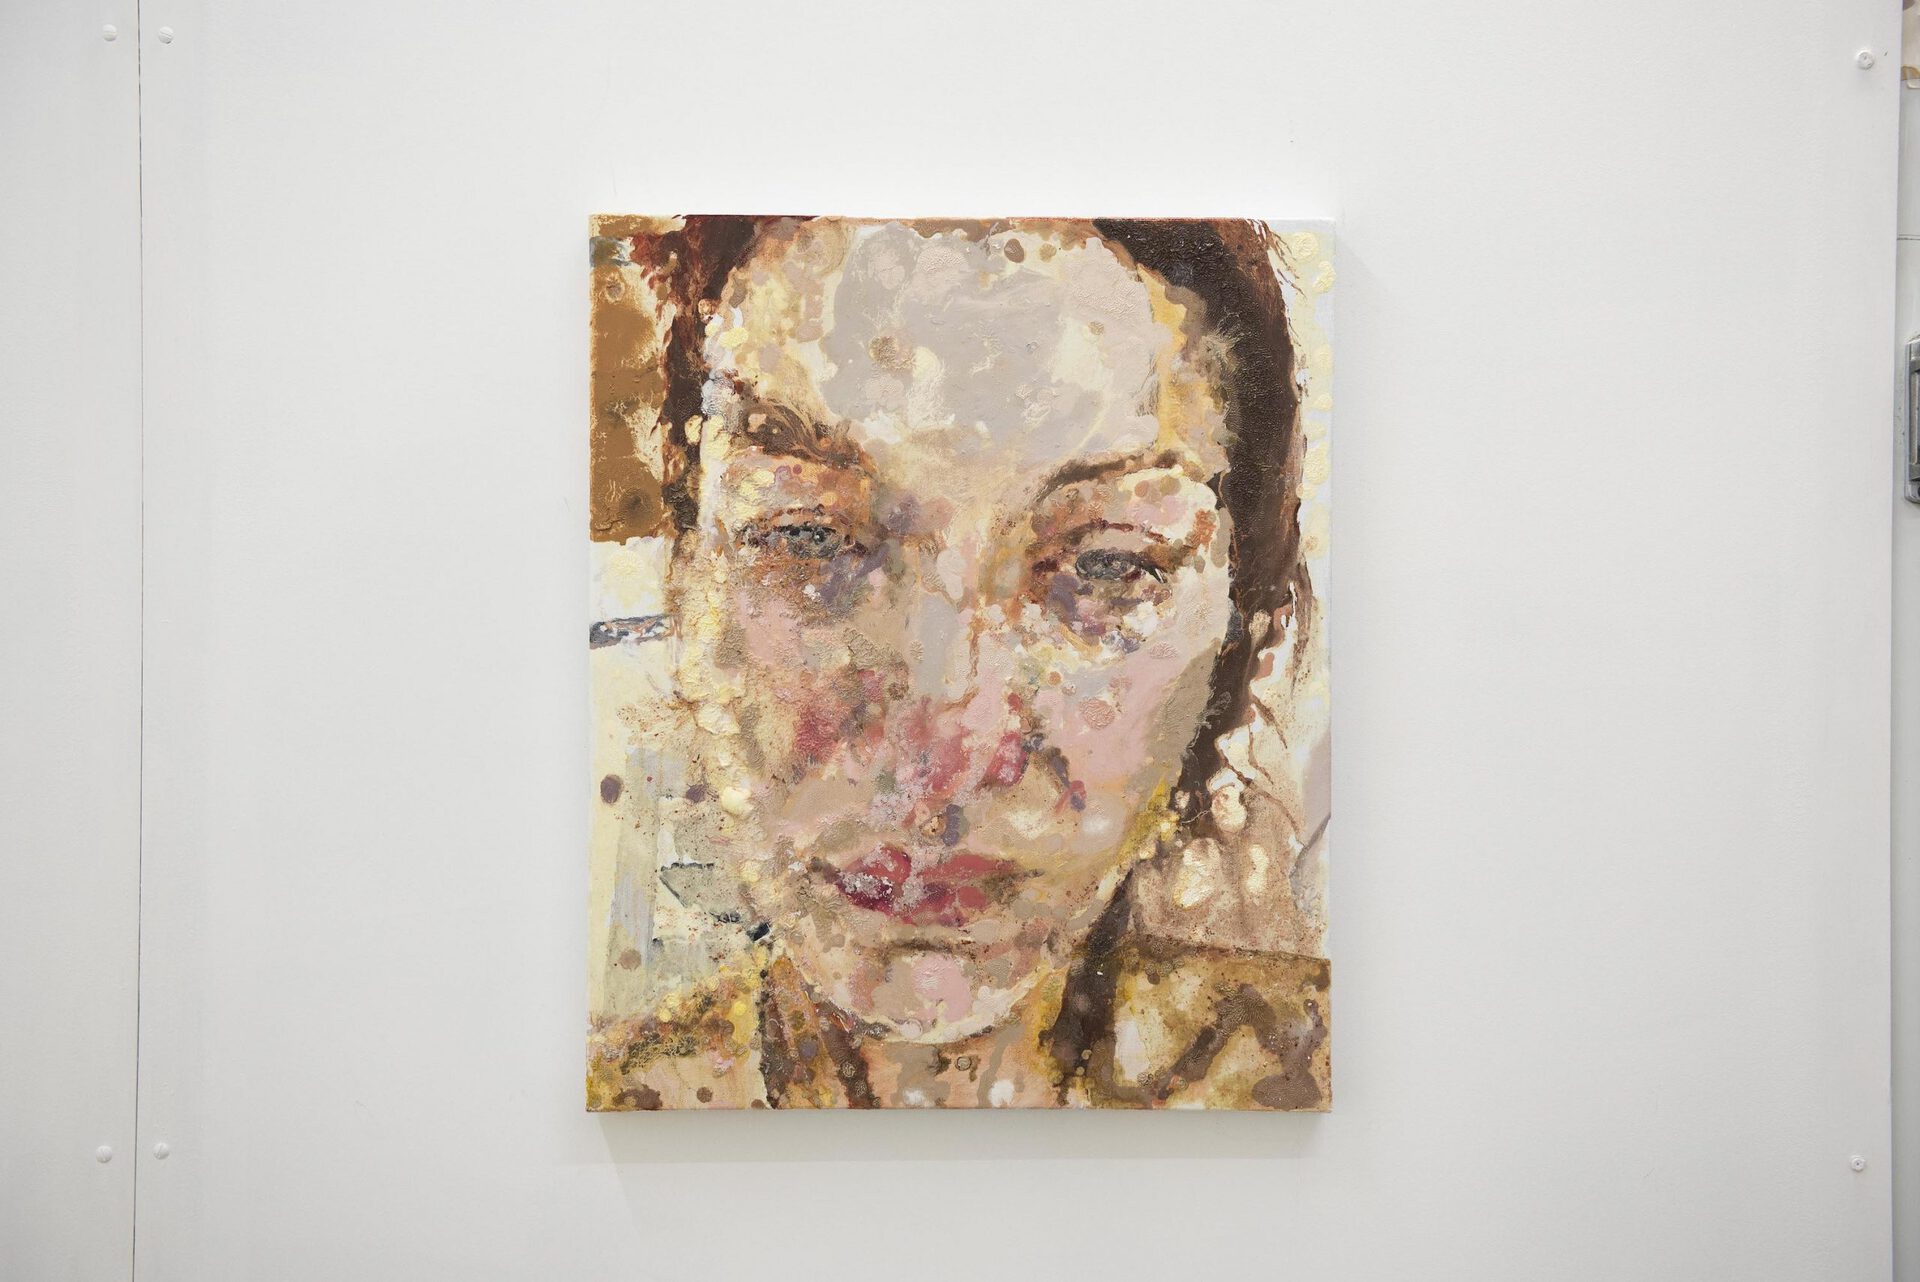 Zoe Jackson, Bella Hadid crying selfie mental health awareness post, 2021, oil on canvas, 51cm x 61cm